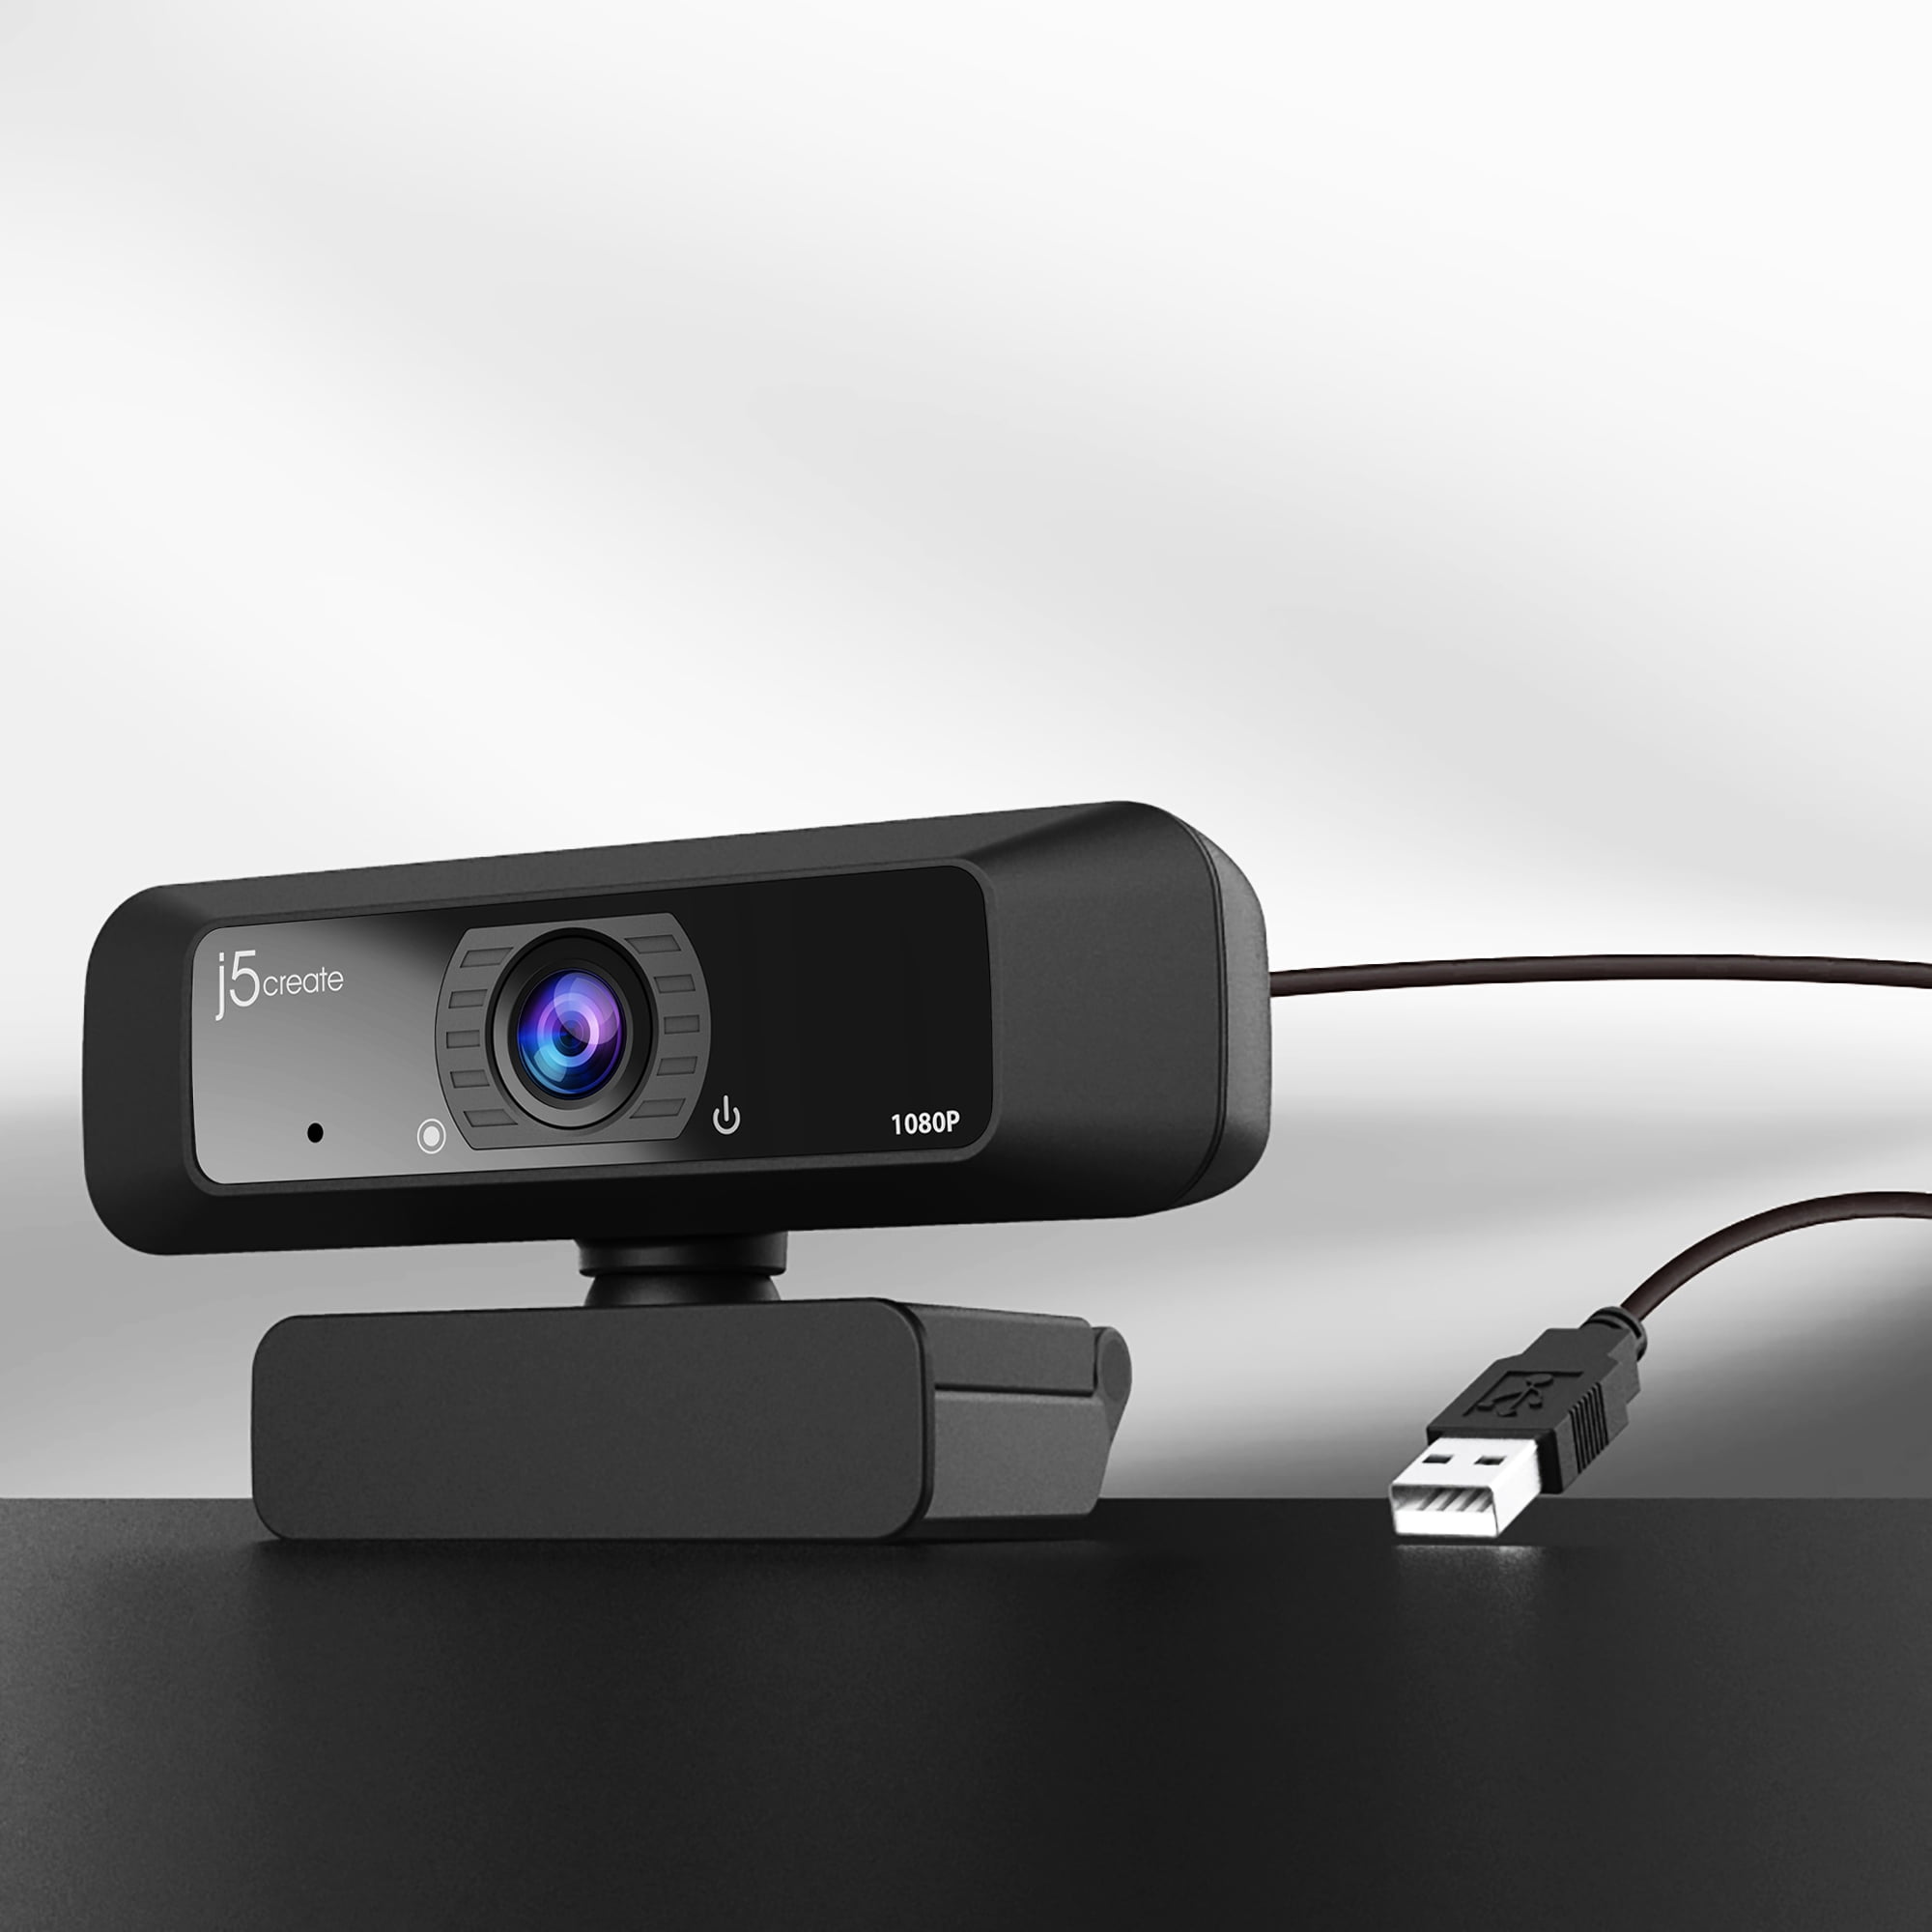 USB™ 4K ULTRA HD Webcam with 5x Digital Zoom Remote Control – j5create